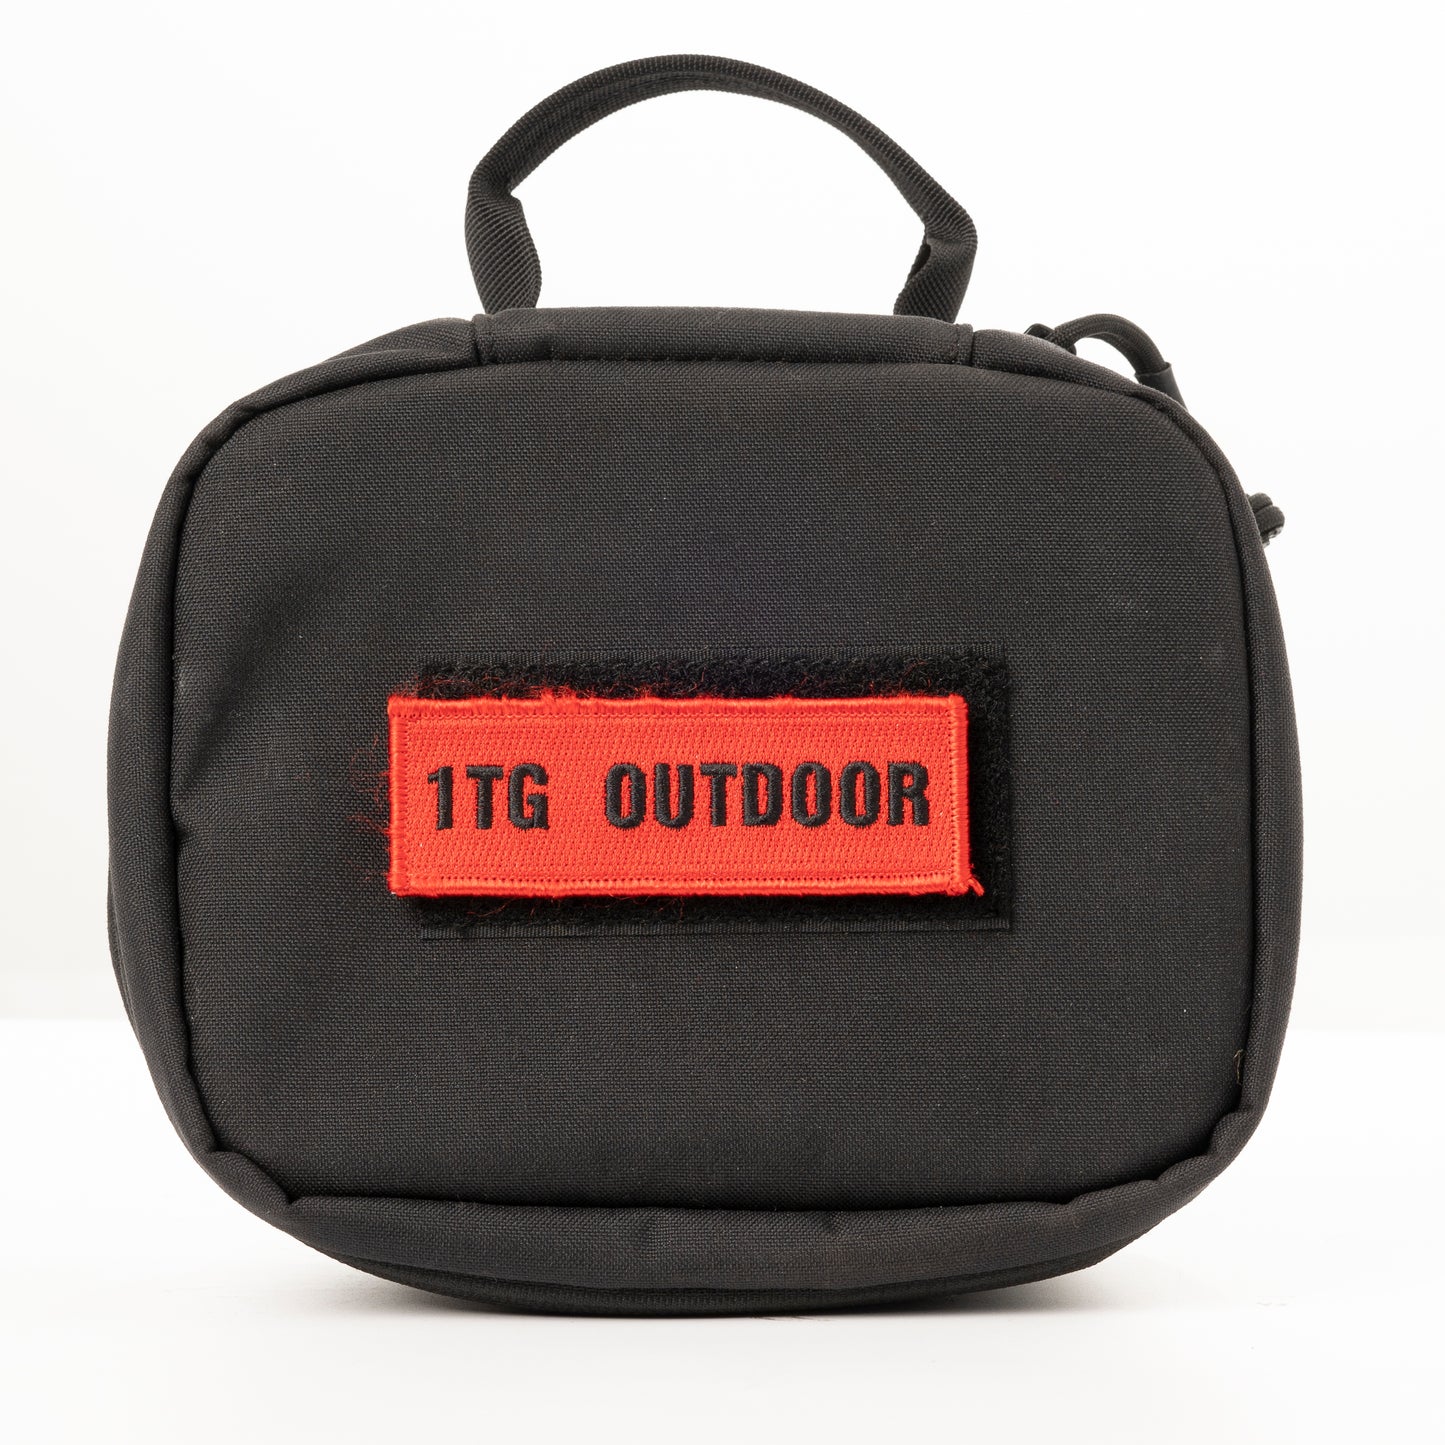 1TG OUTDOOR Camping handbag